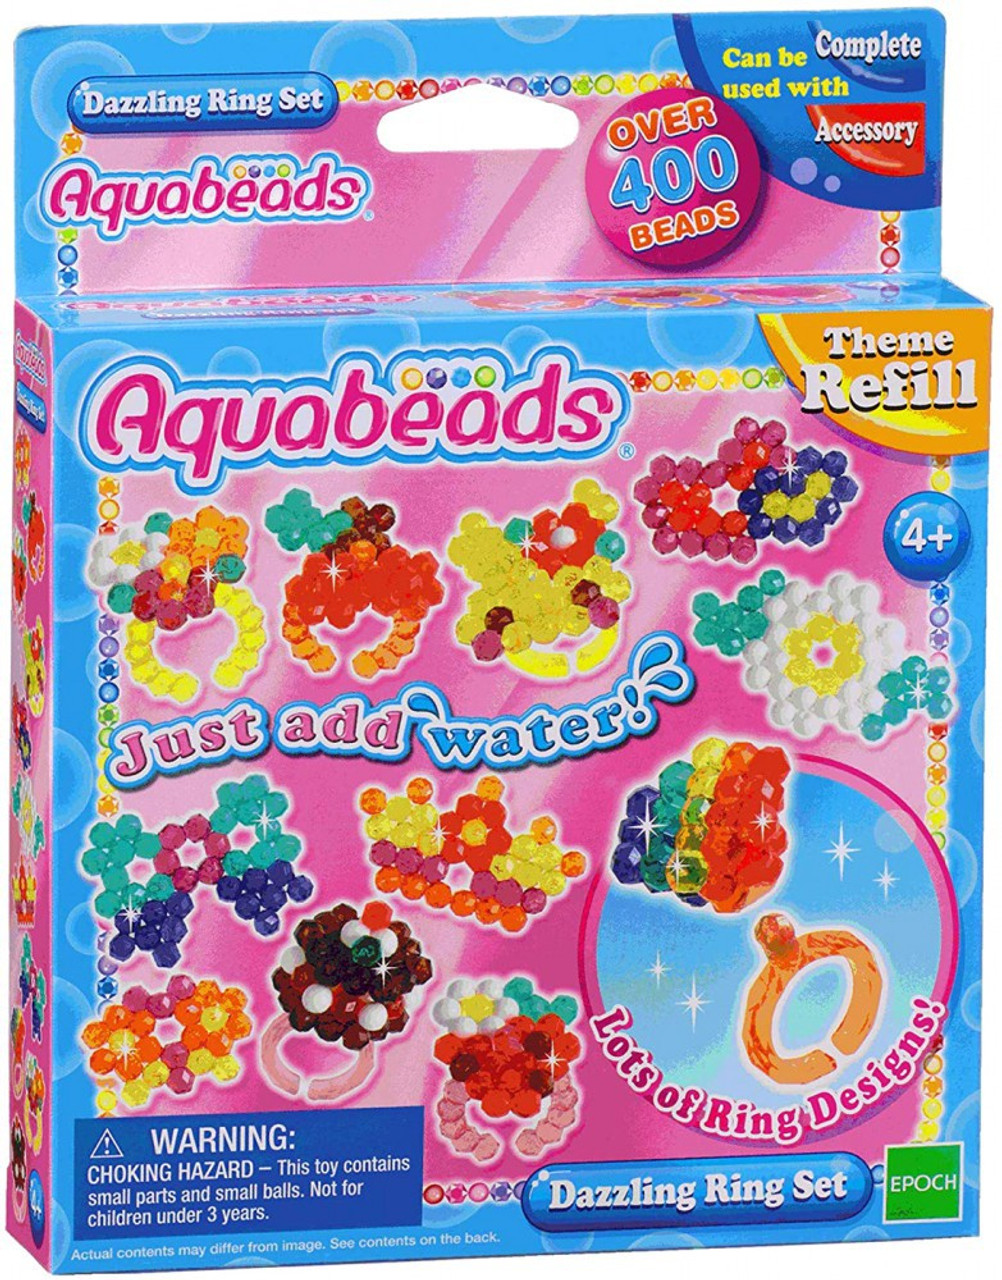 Aquabeads Dazzling Ring Set Damaged Package International Playthings Llc Toywiz - roblox codes sweet tnt magazine